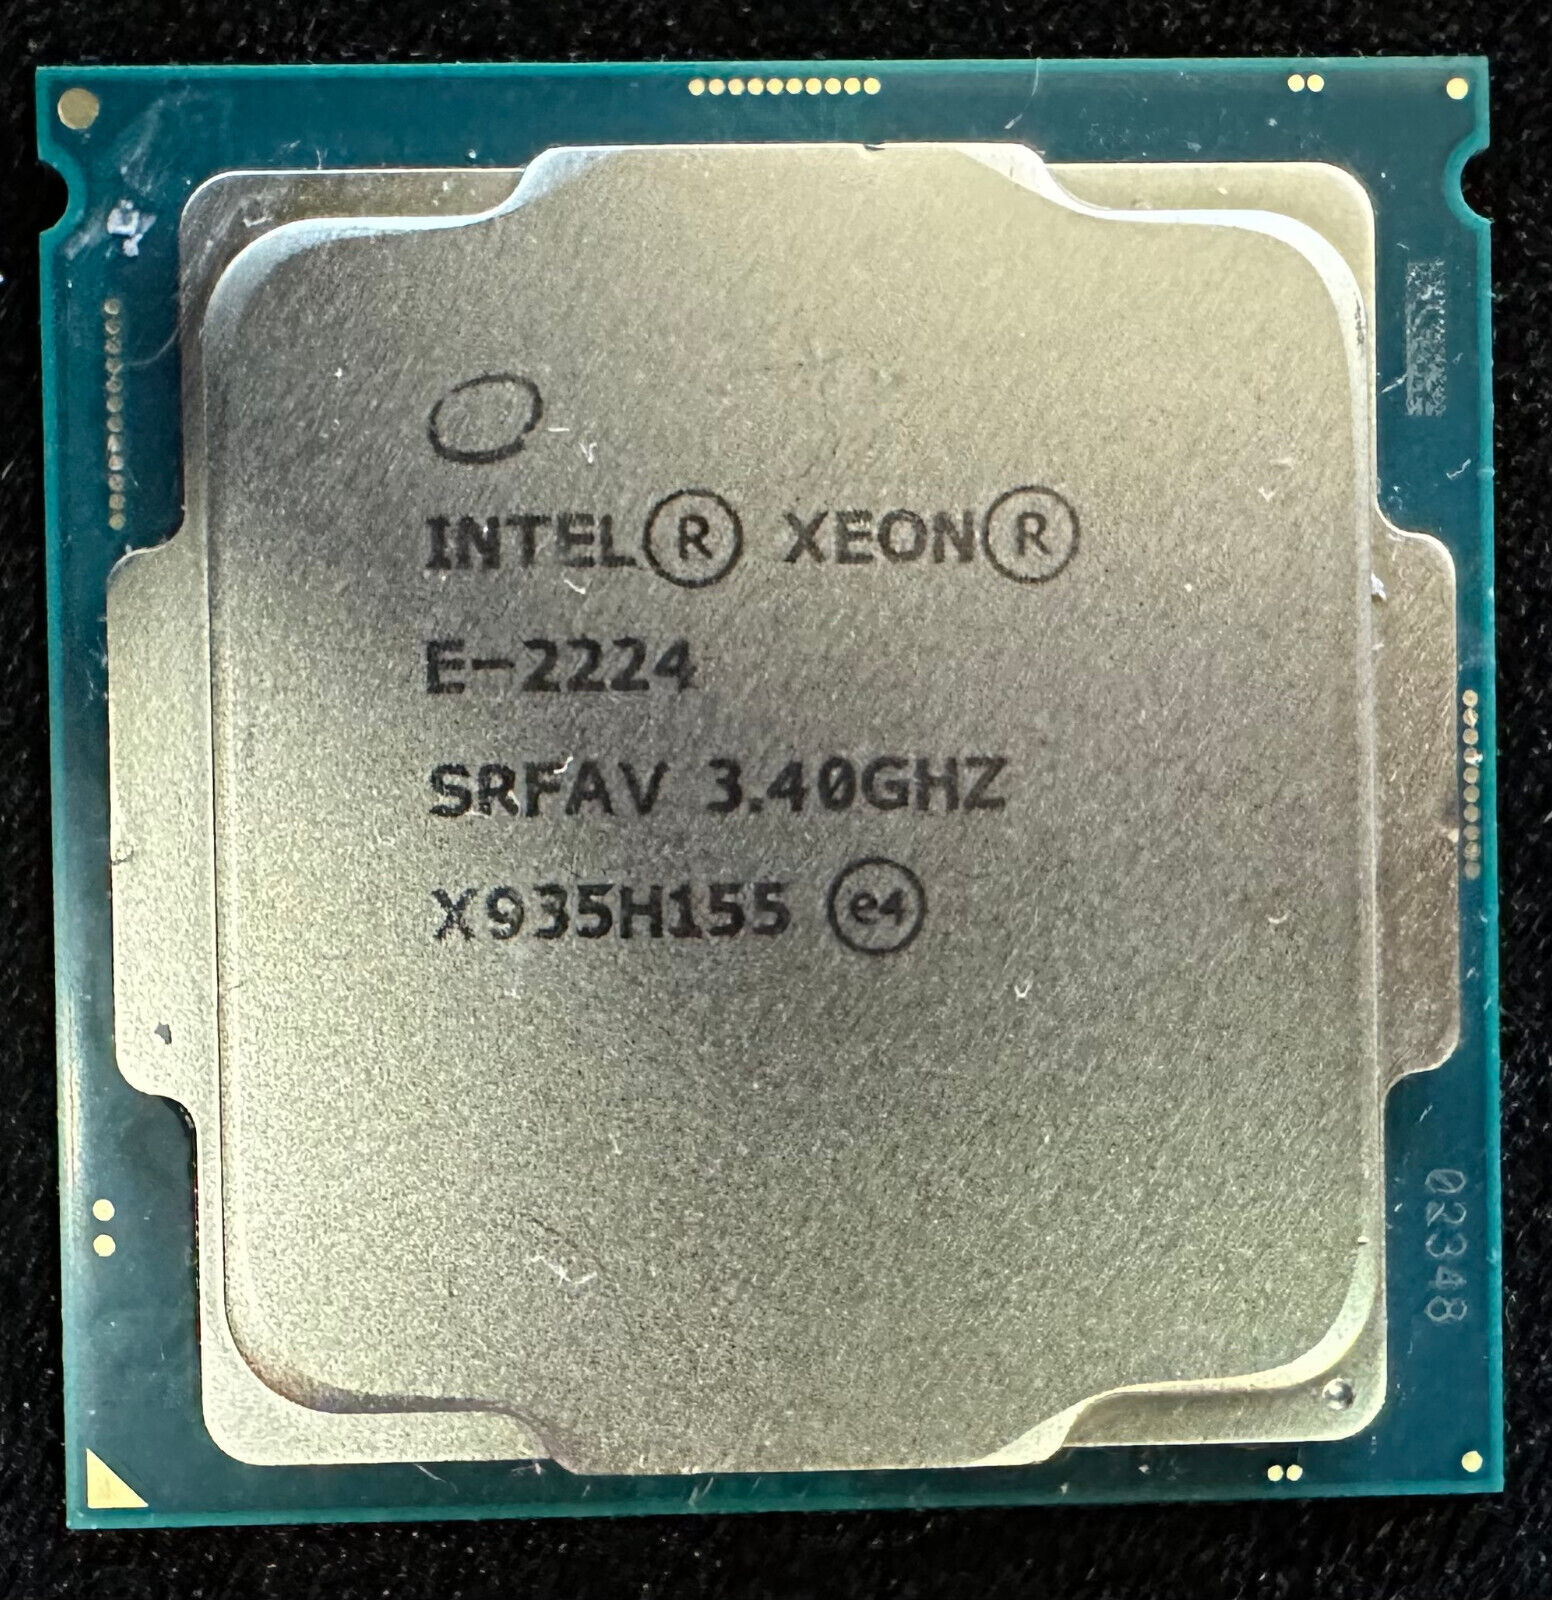 Intel Xeon E-2224 4-Cores 3.4GHz FCLGA 1151 CPU Processor (SRFAV)